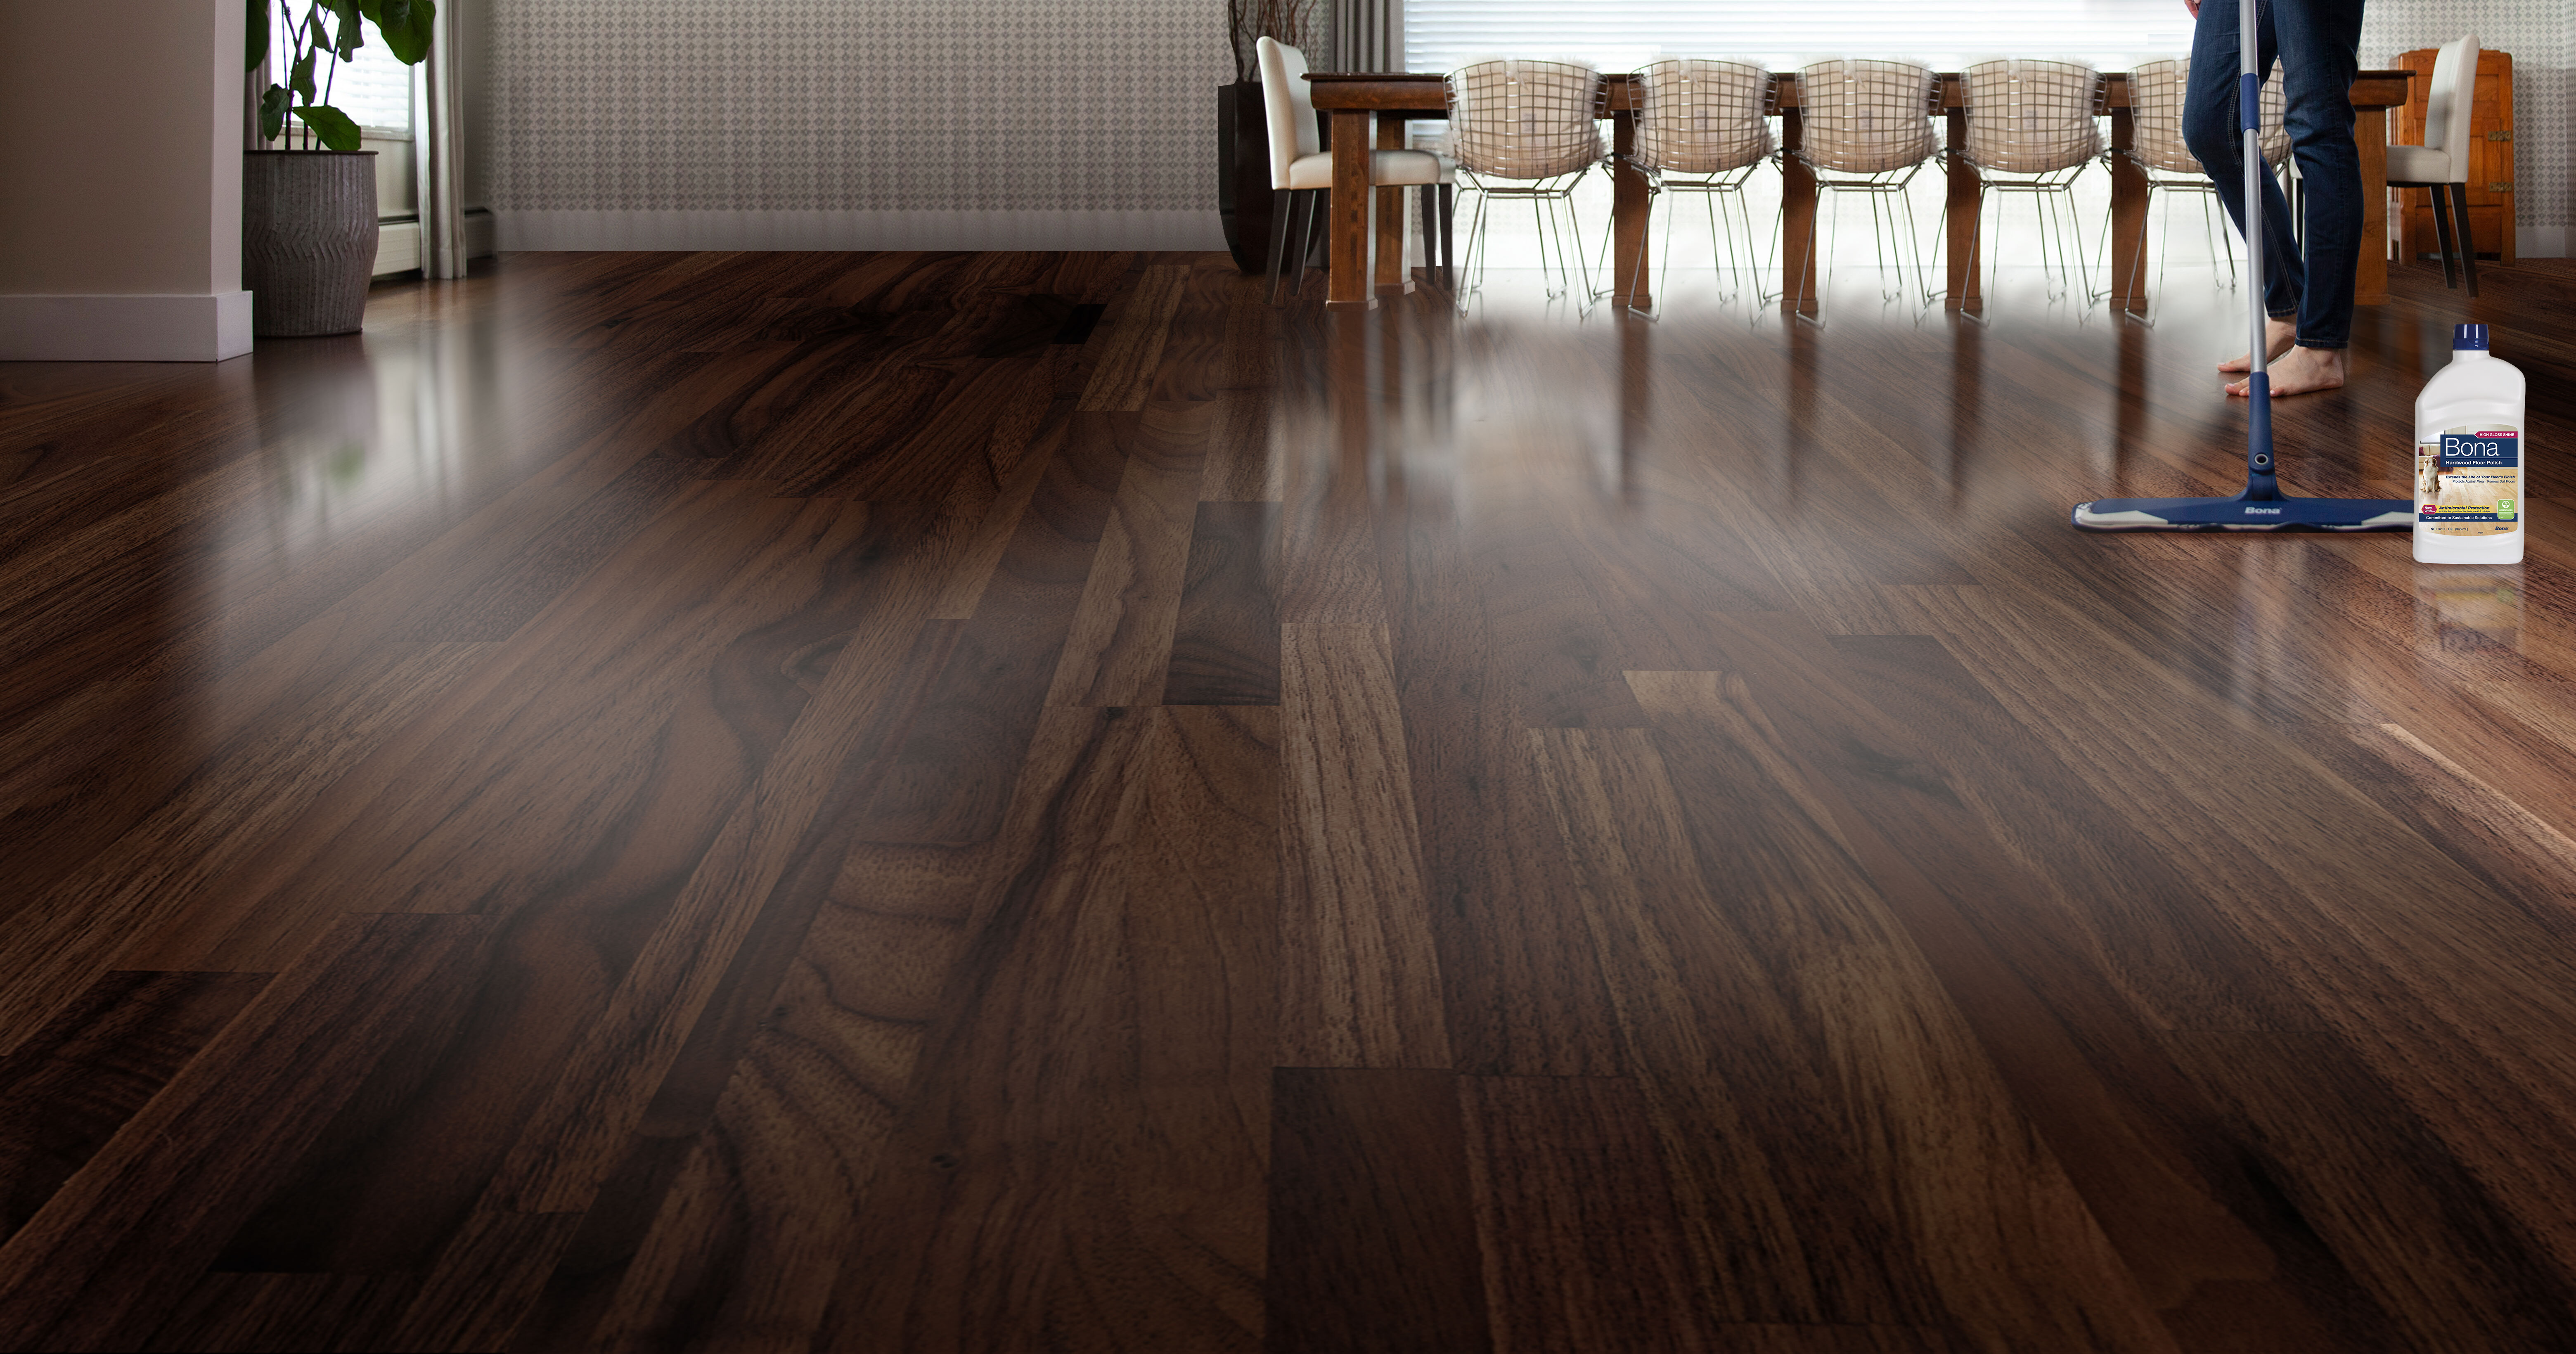 How To Polish Hardwood Floors Do S And, How To Add Shine To Hardwood Floors